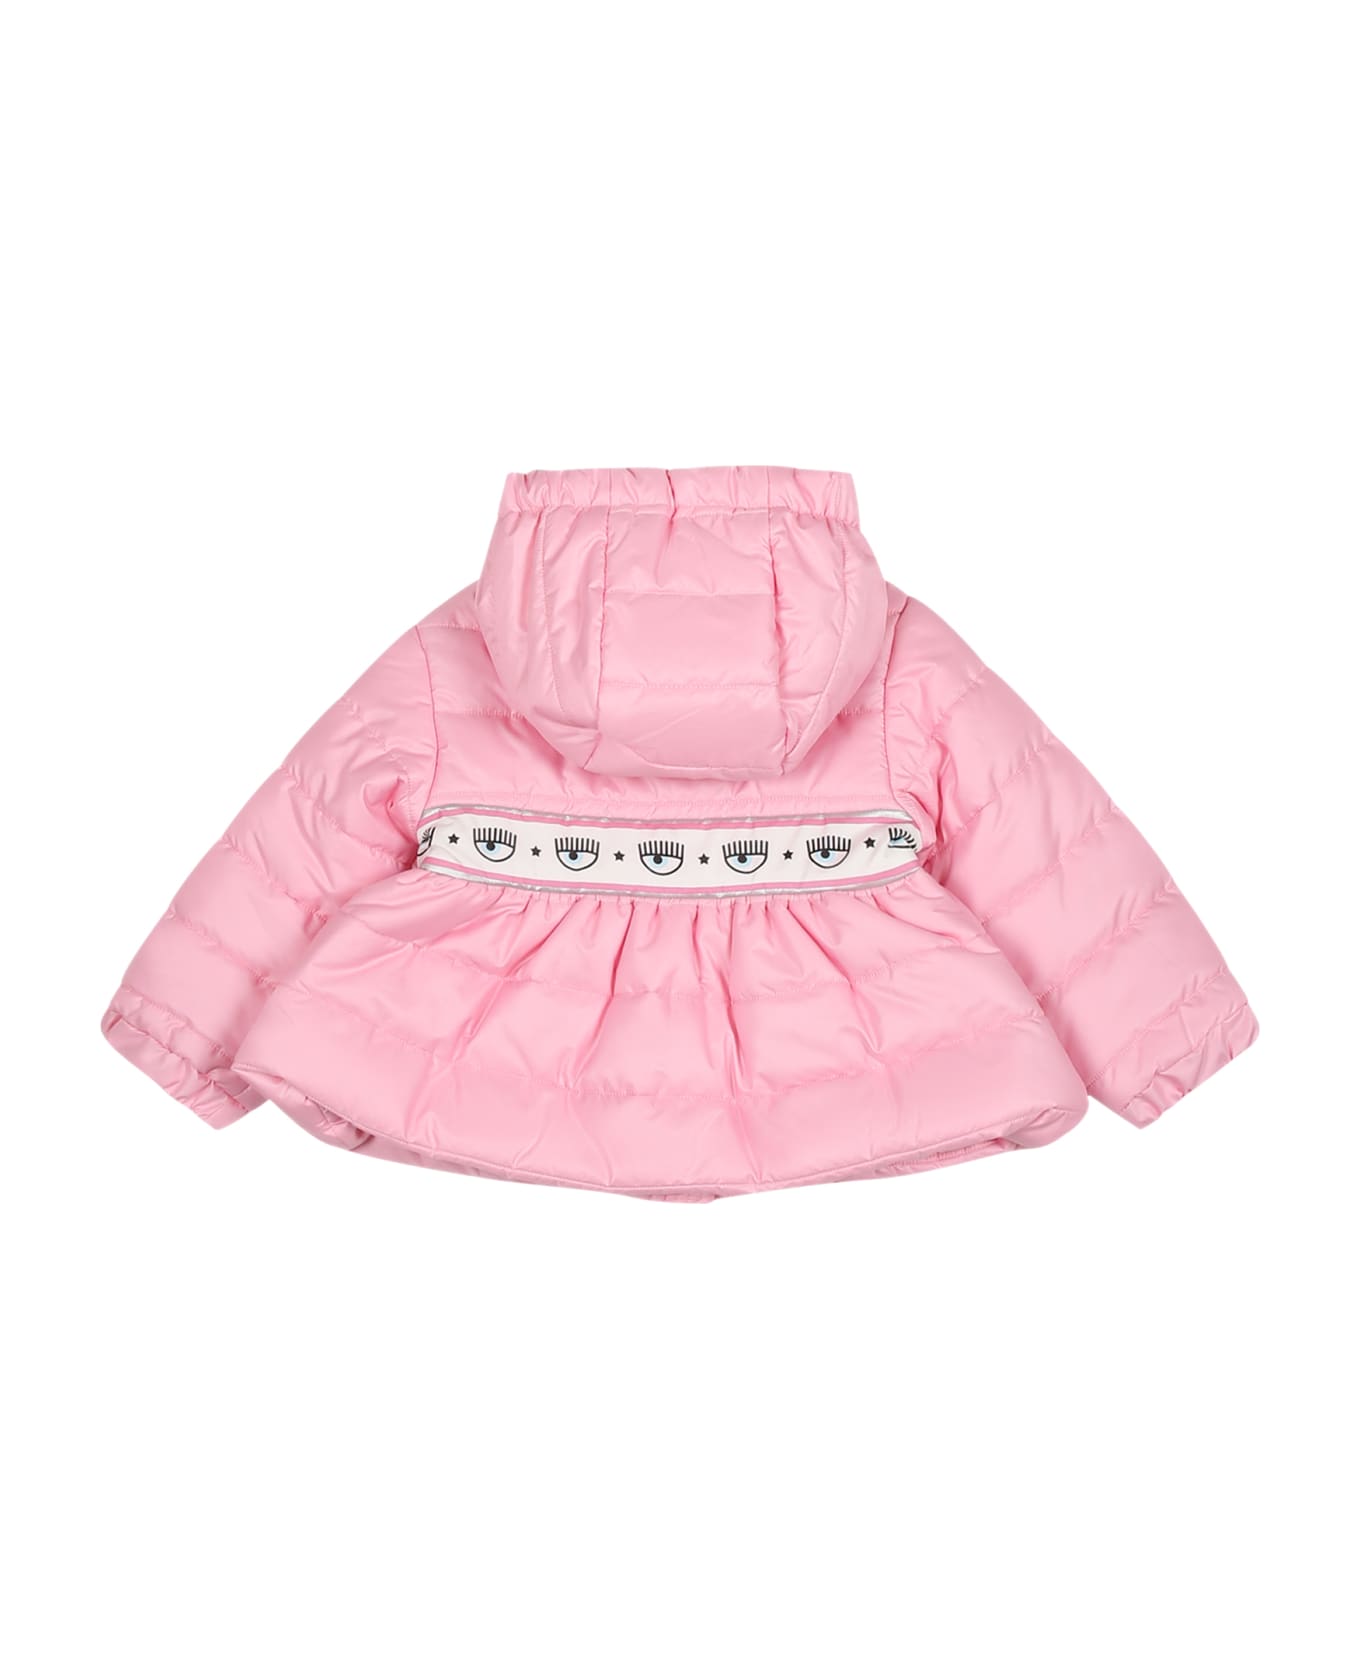 Chiara Ferragni Pink Down Jacket For Baby Girl With Eyestar - Pink コート＆ジャケット